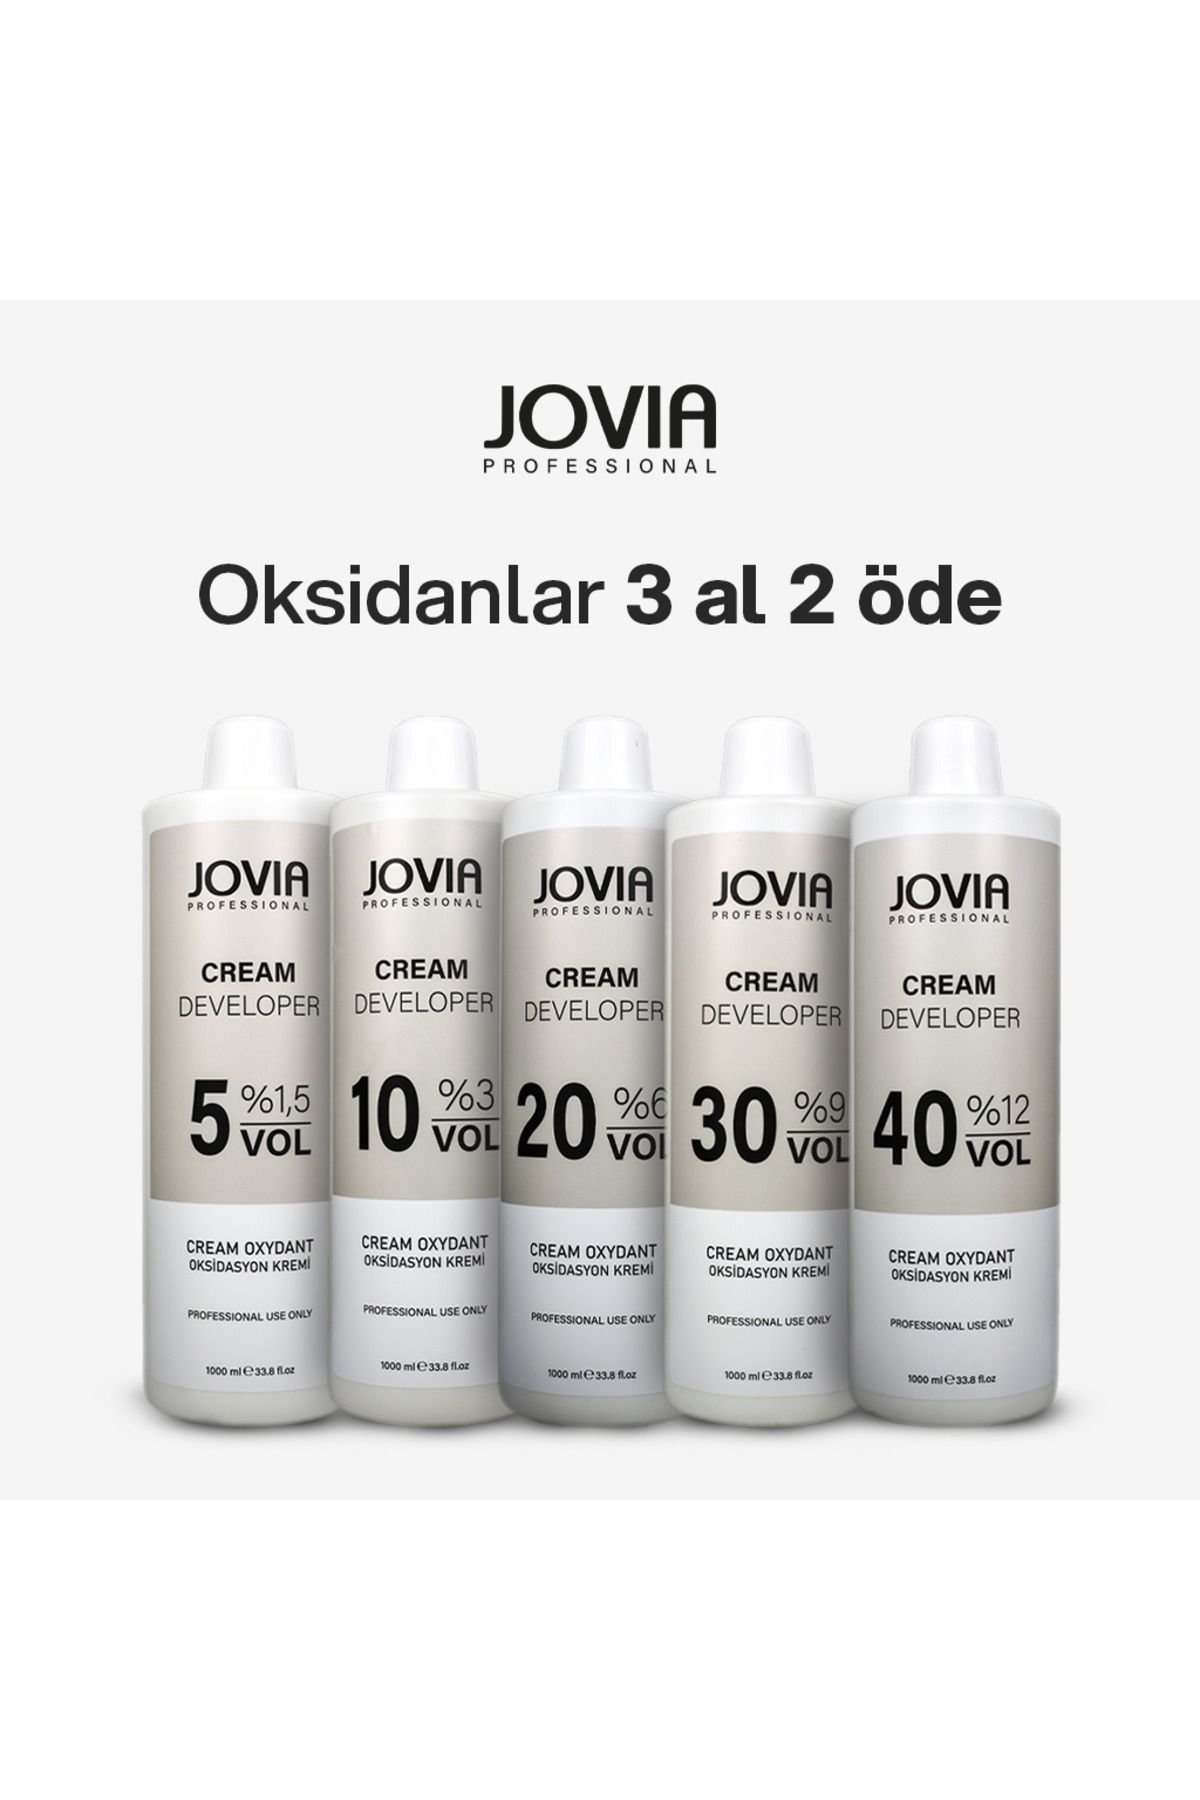 Jovia Cream Developer 5 Vol %1,5 Cream Oxydant Oksidasyon Kremi